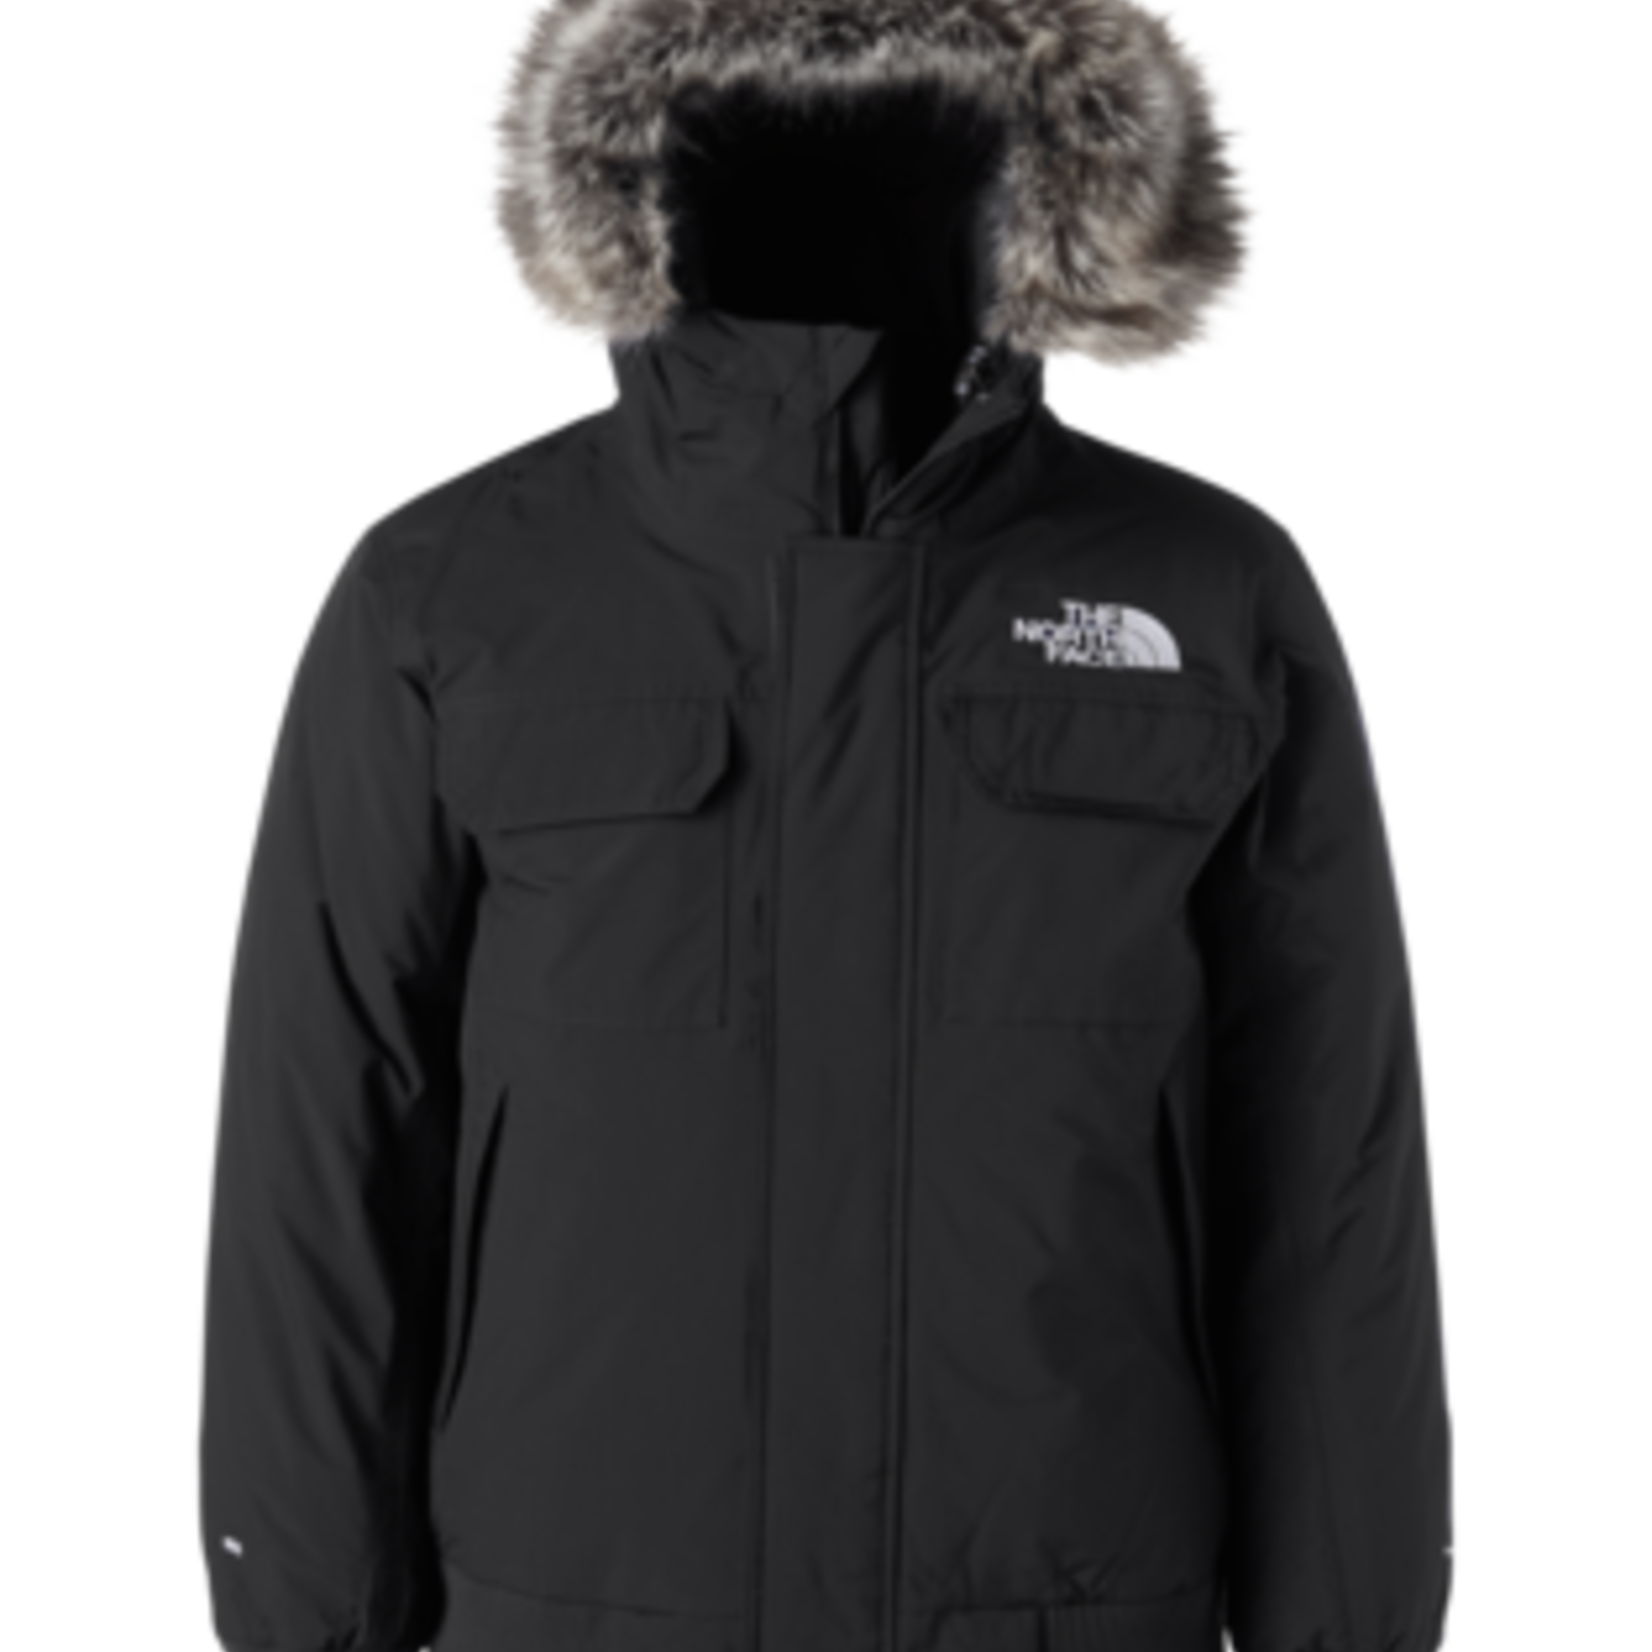 https://cdn.shoplightspeed.com/shops/641570/files/49508713/1652x1652x1/the-north-face-the-north-face-winter-jacket-mcmurd.jpg